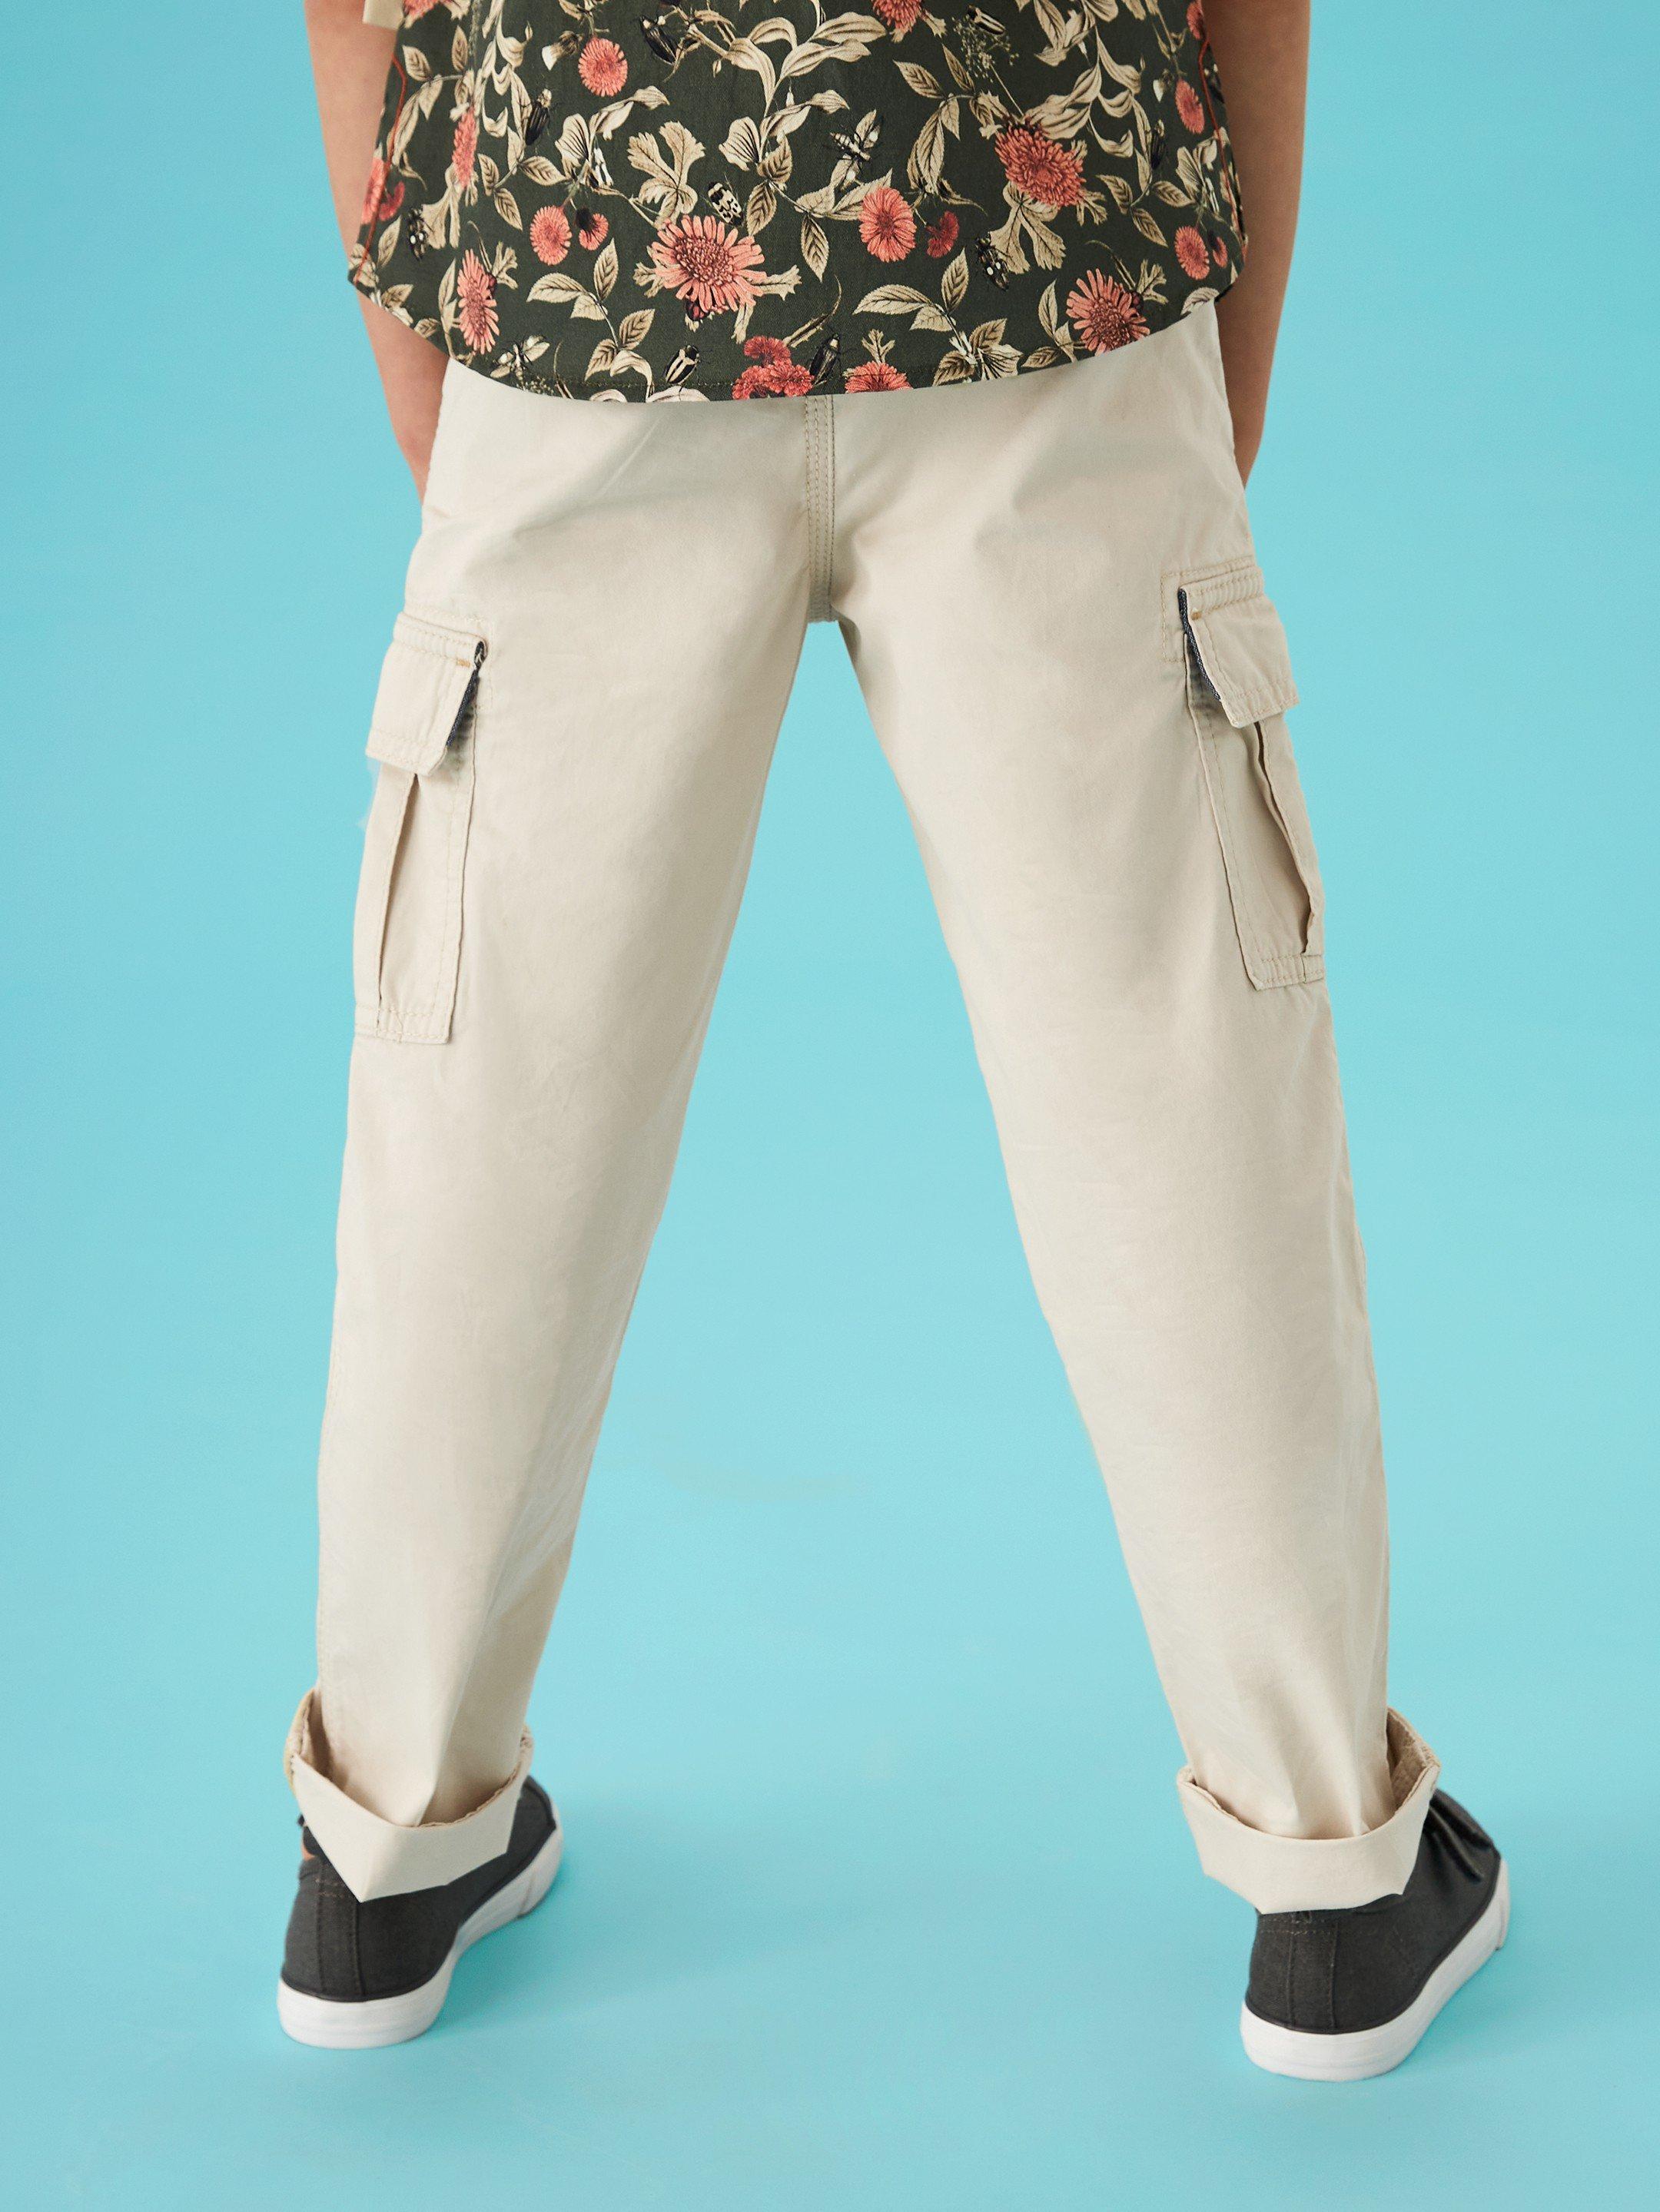 Caleb Cargo Trouser in LGT NAT - MODEL BACK